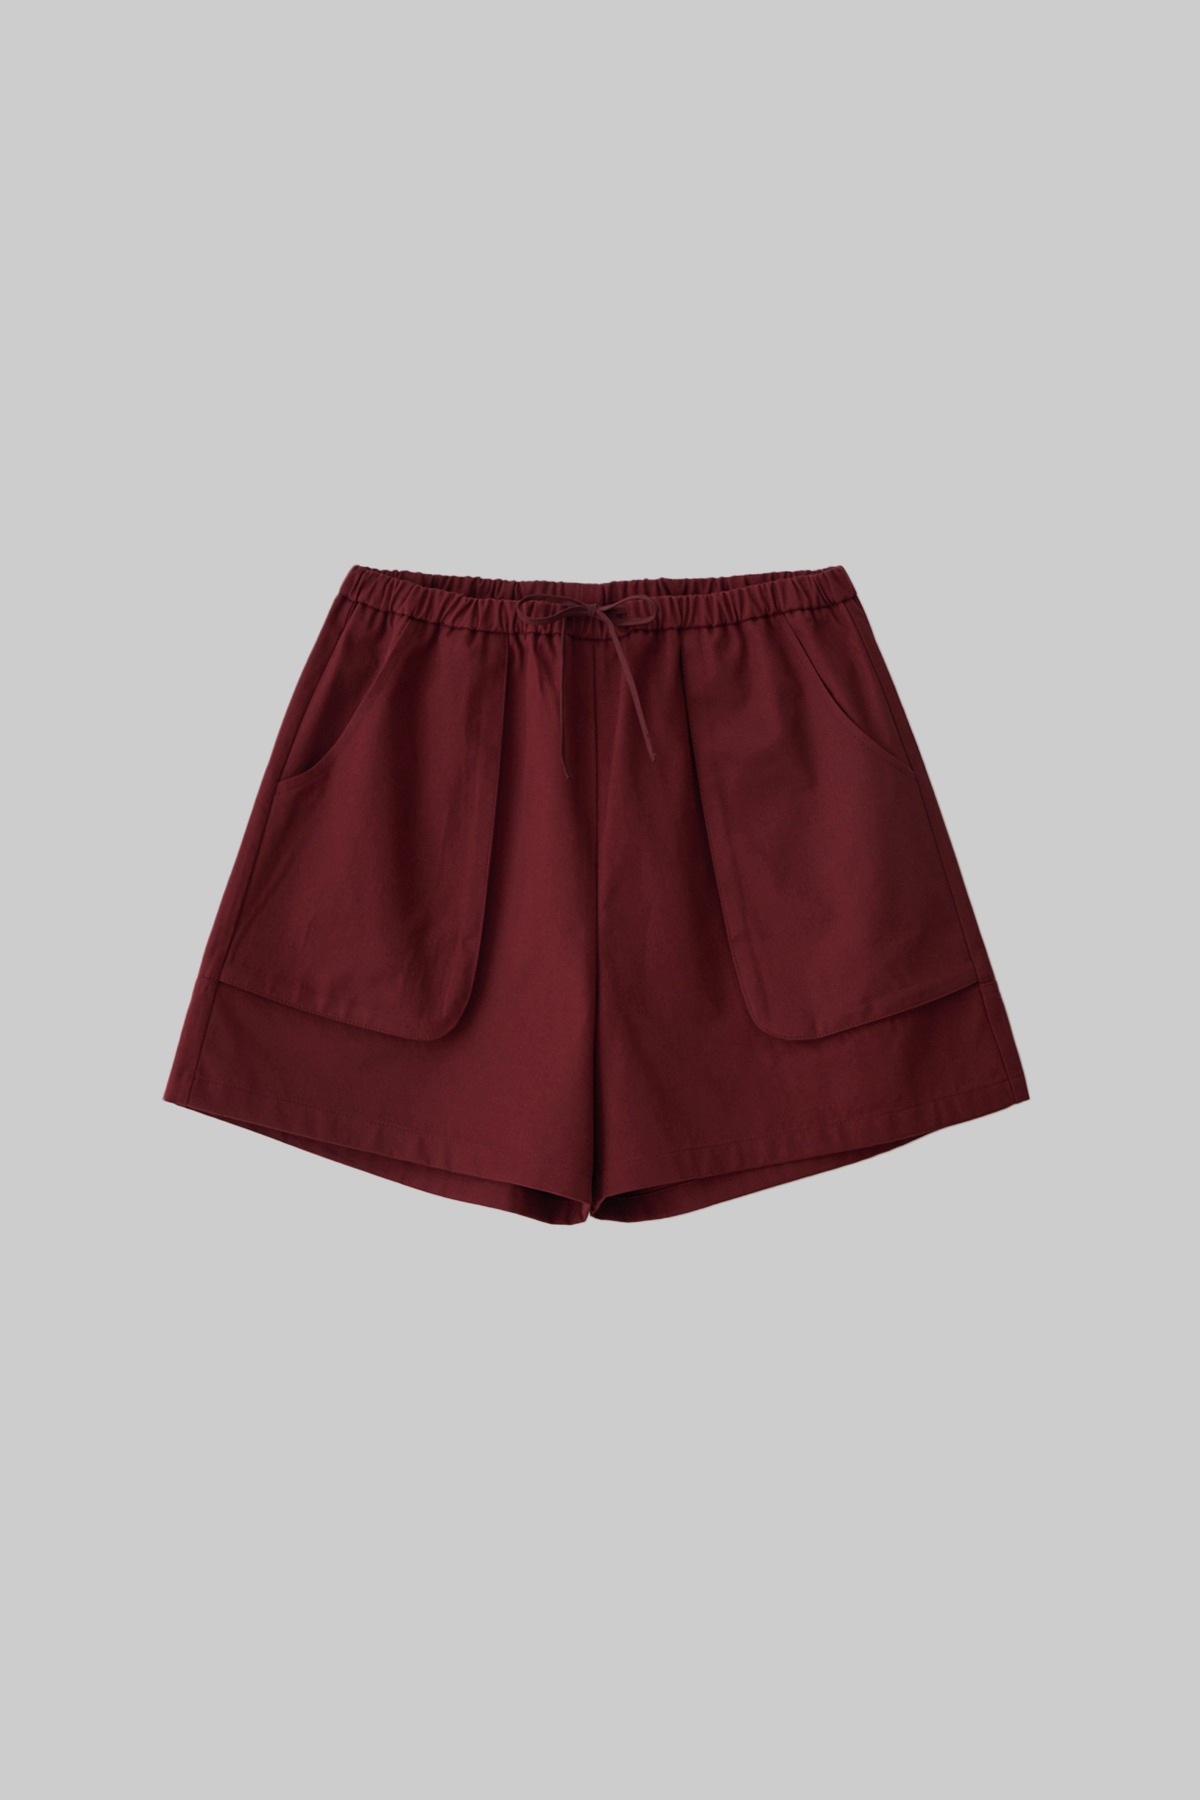 Pocket line half pants(deep red)